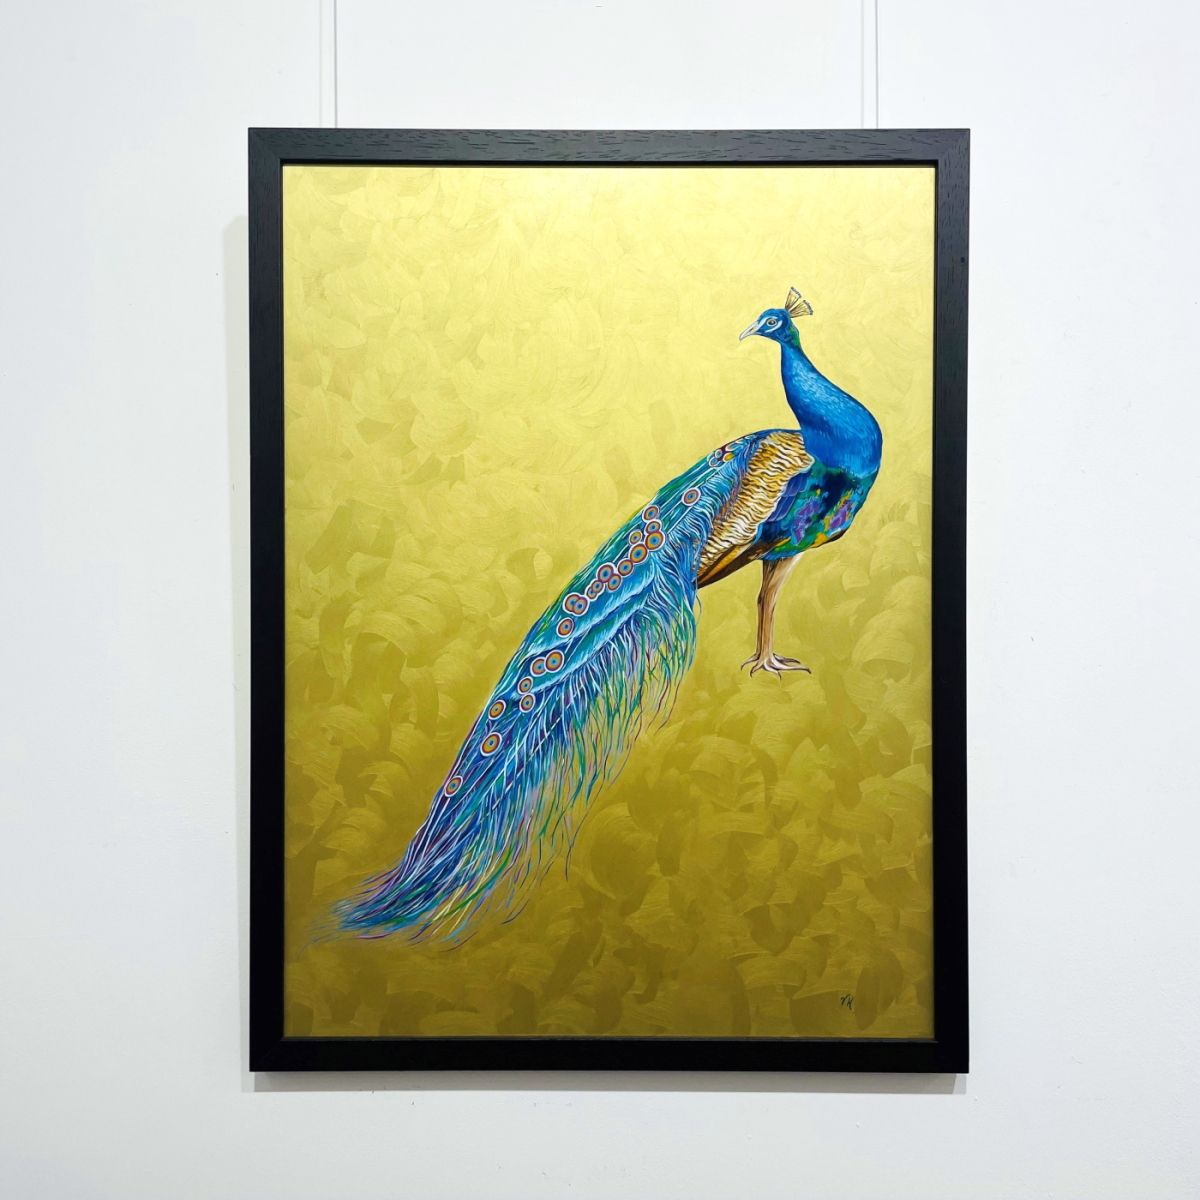 'Peacock' by artist Victoria Heald